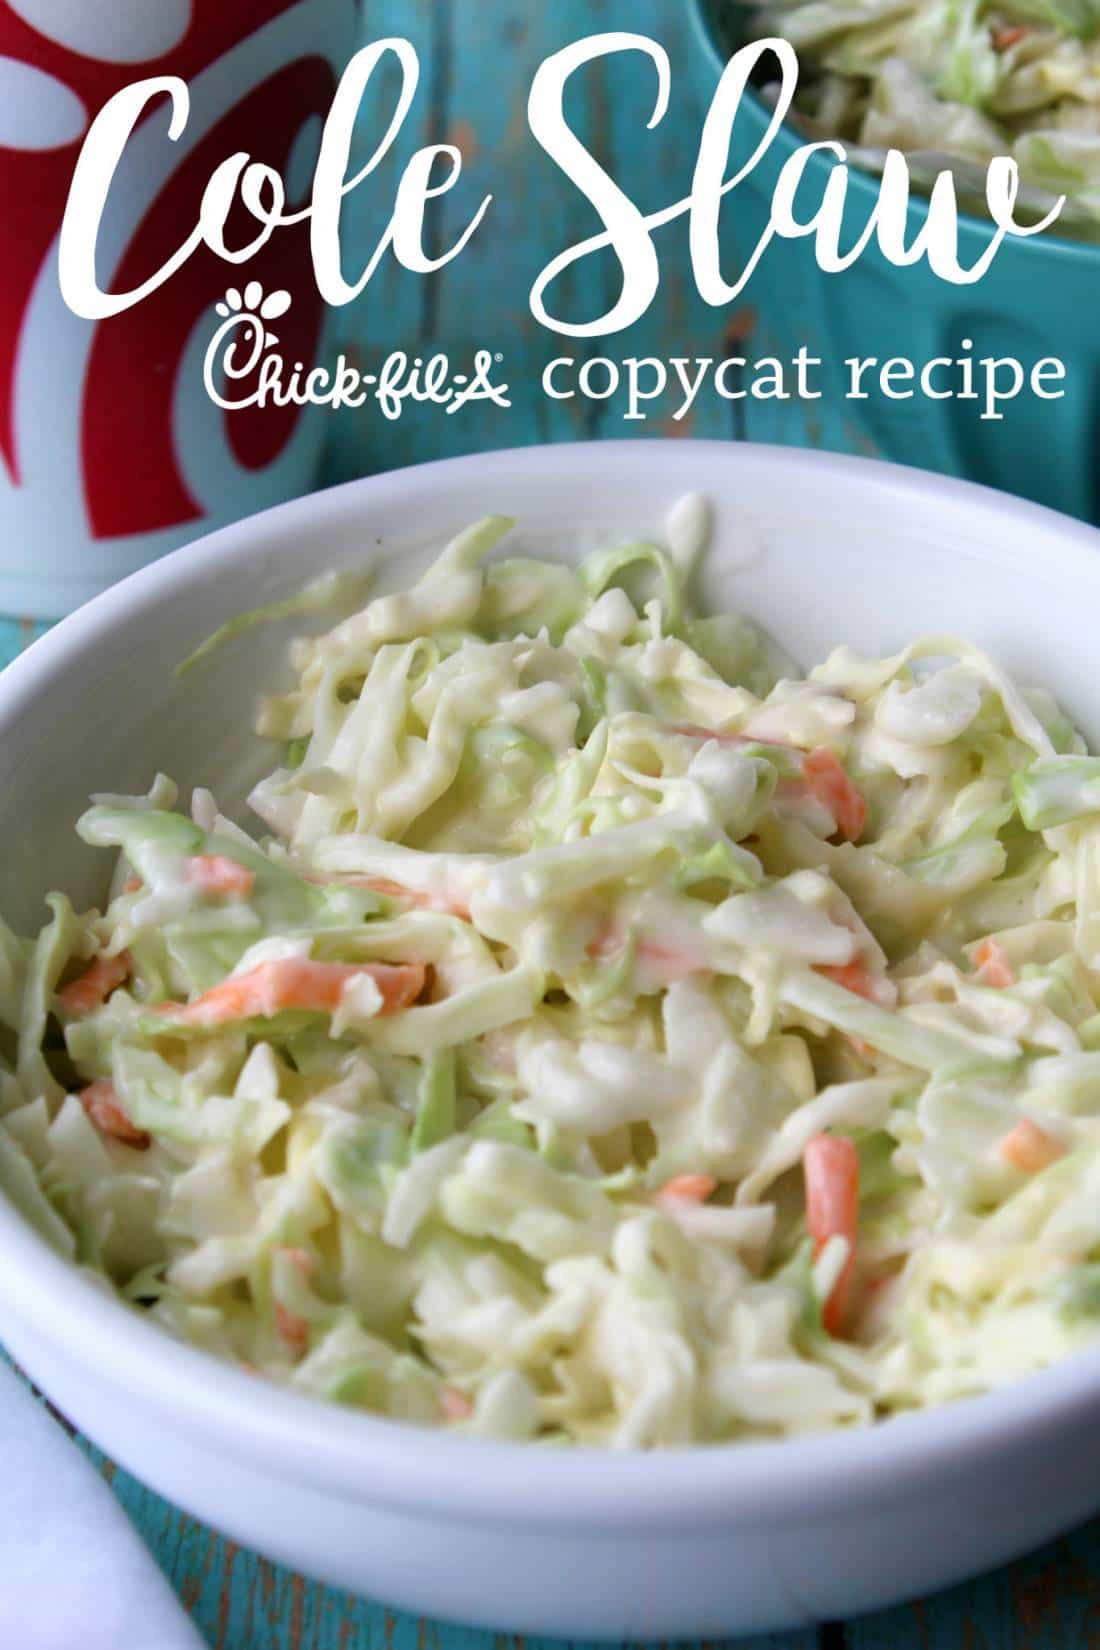 Easy Chick-fil-a Copycat Coleslaw Recipe